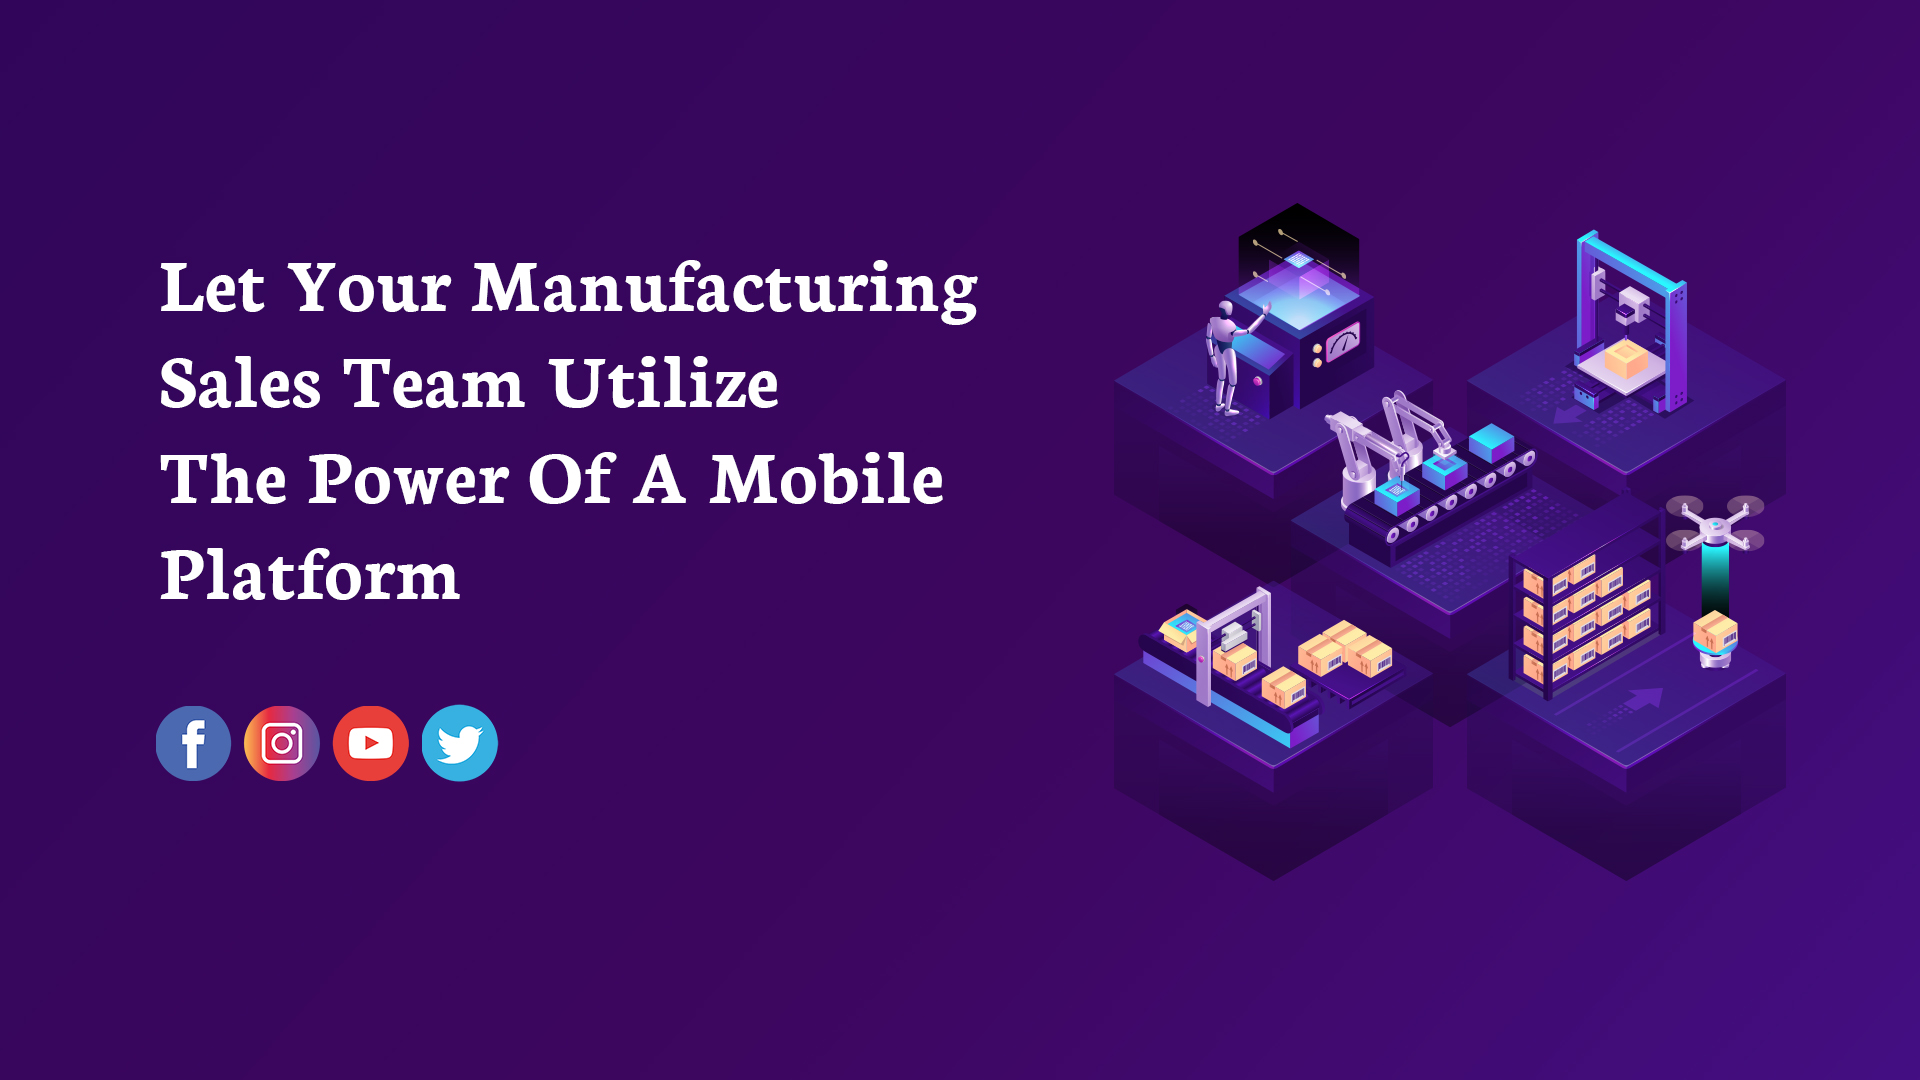 Let Your Manufacturing Sales Team Utilize the Power of Mobile Platform